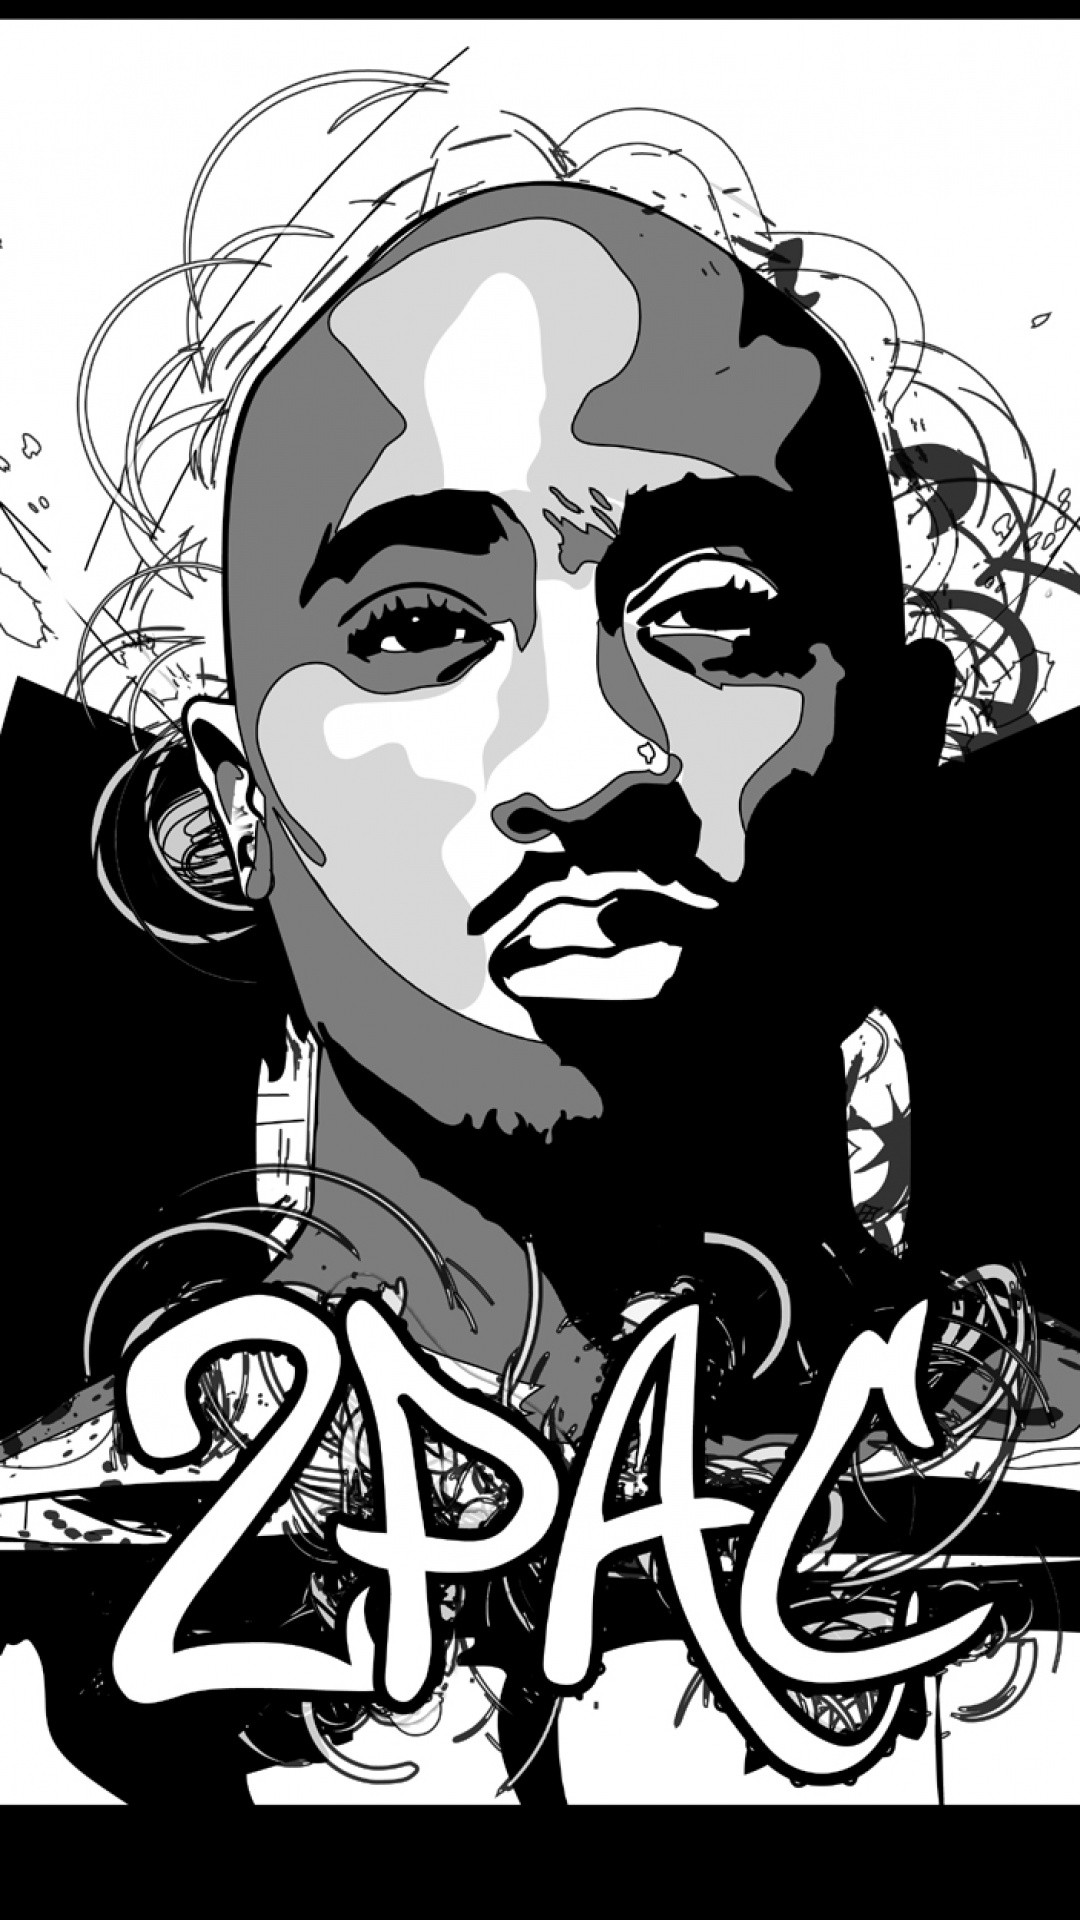 tupac壁紙iphone,図,頭,グラフィックデザイン,黒と白,アート